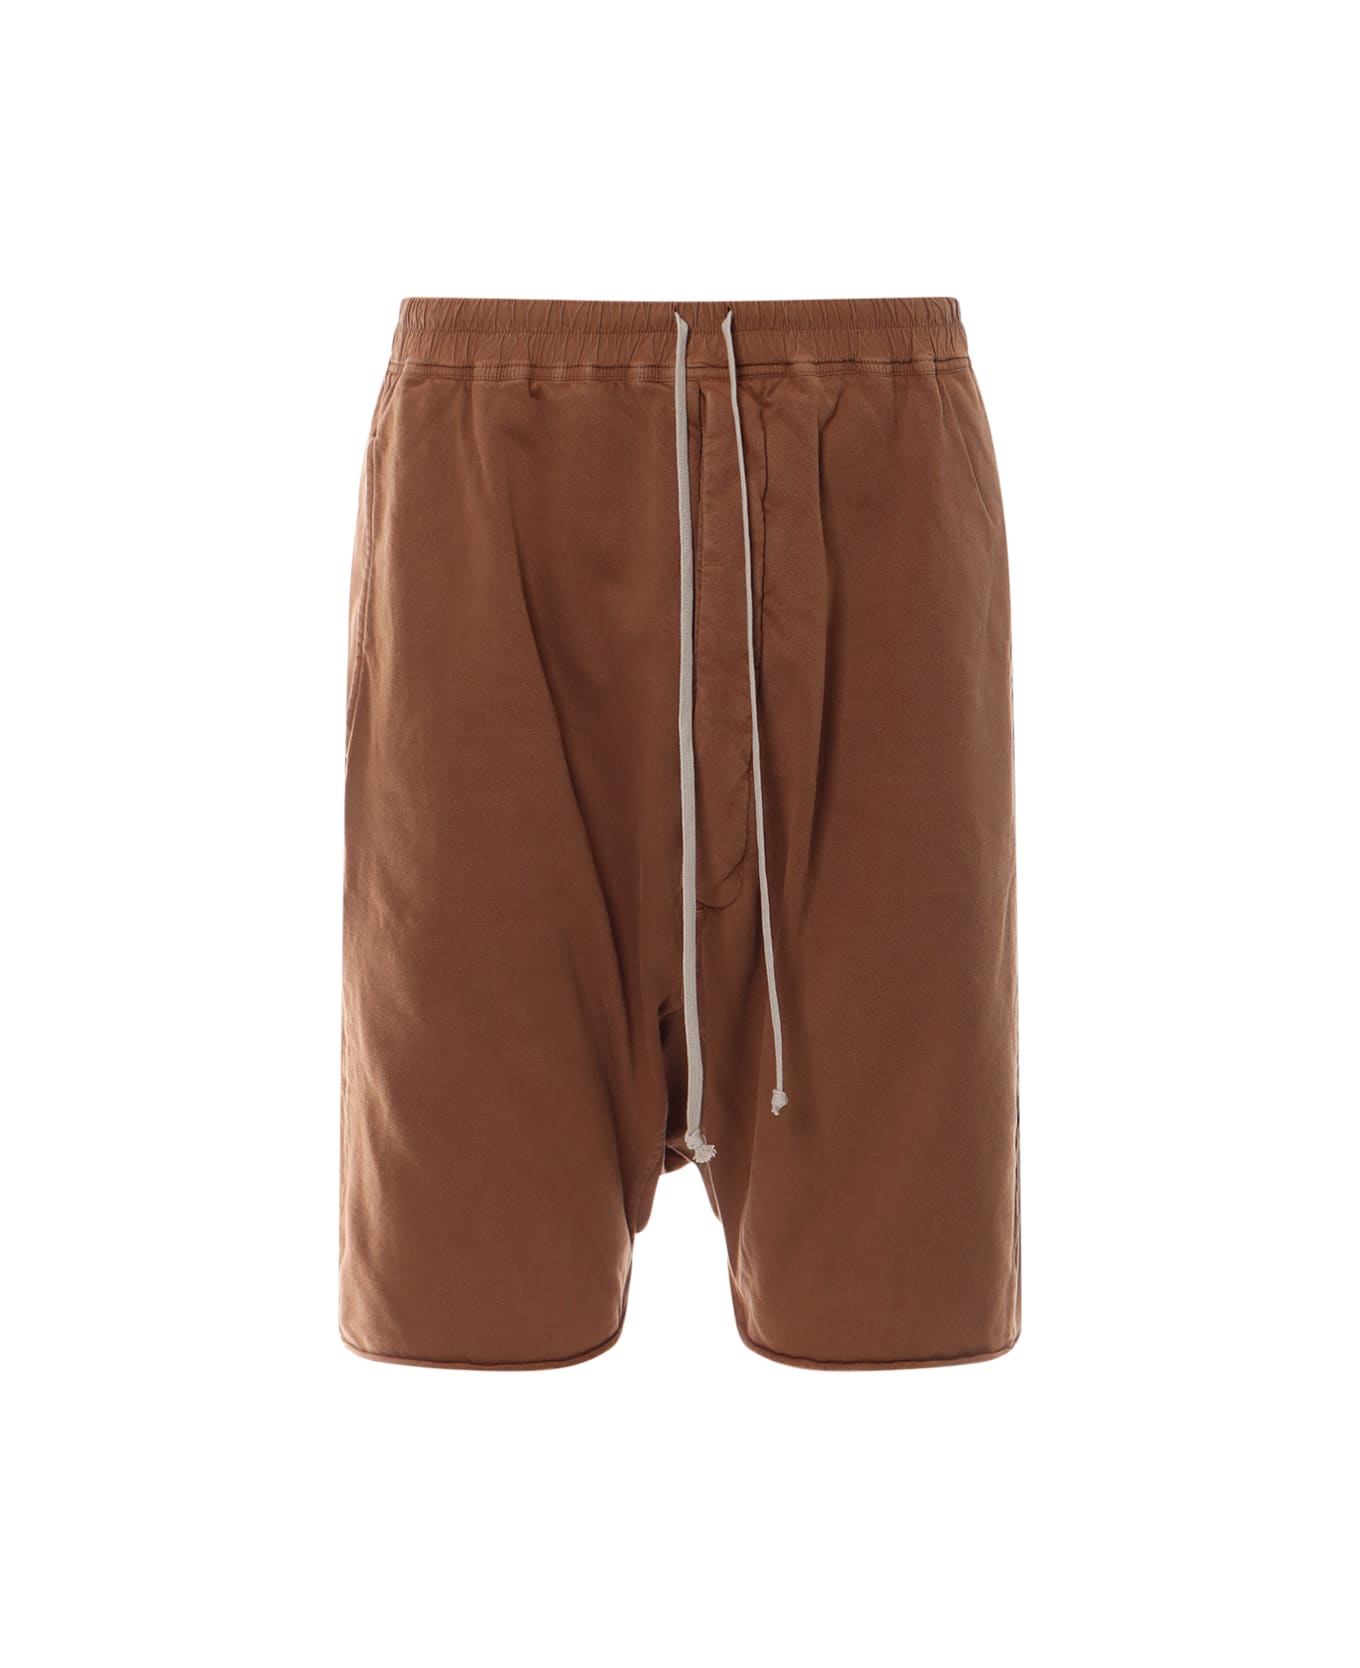 DRKSHDW Bermuda Shorts - Brown ショートパンツ